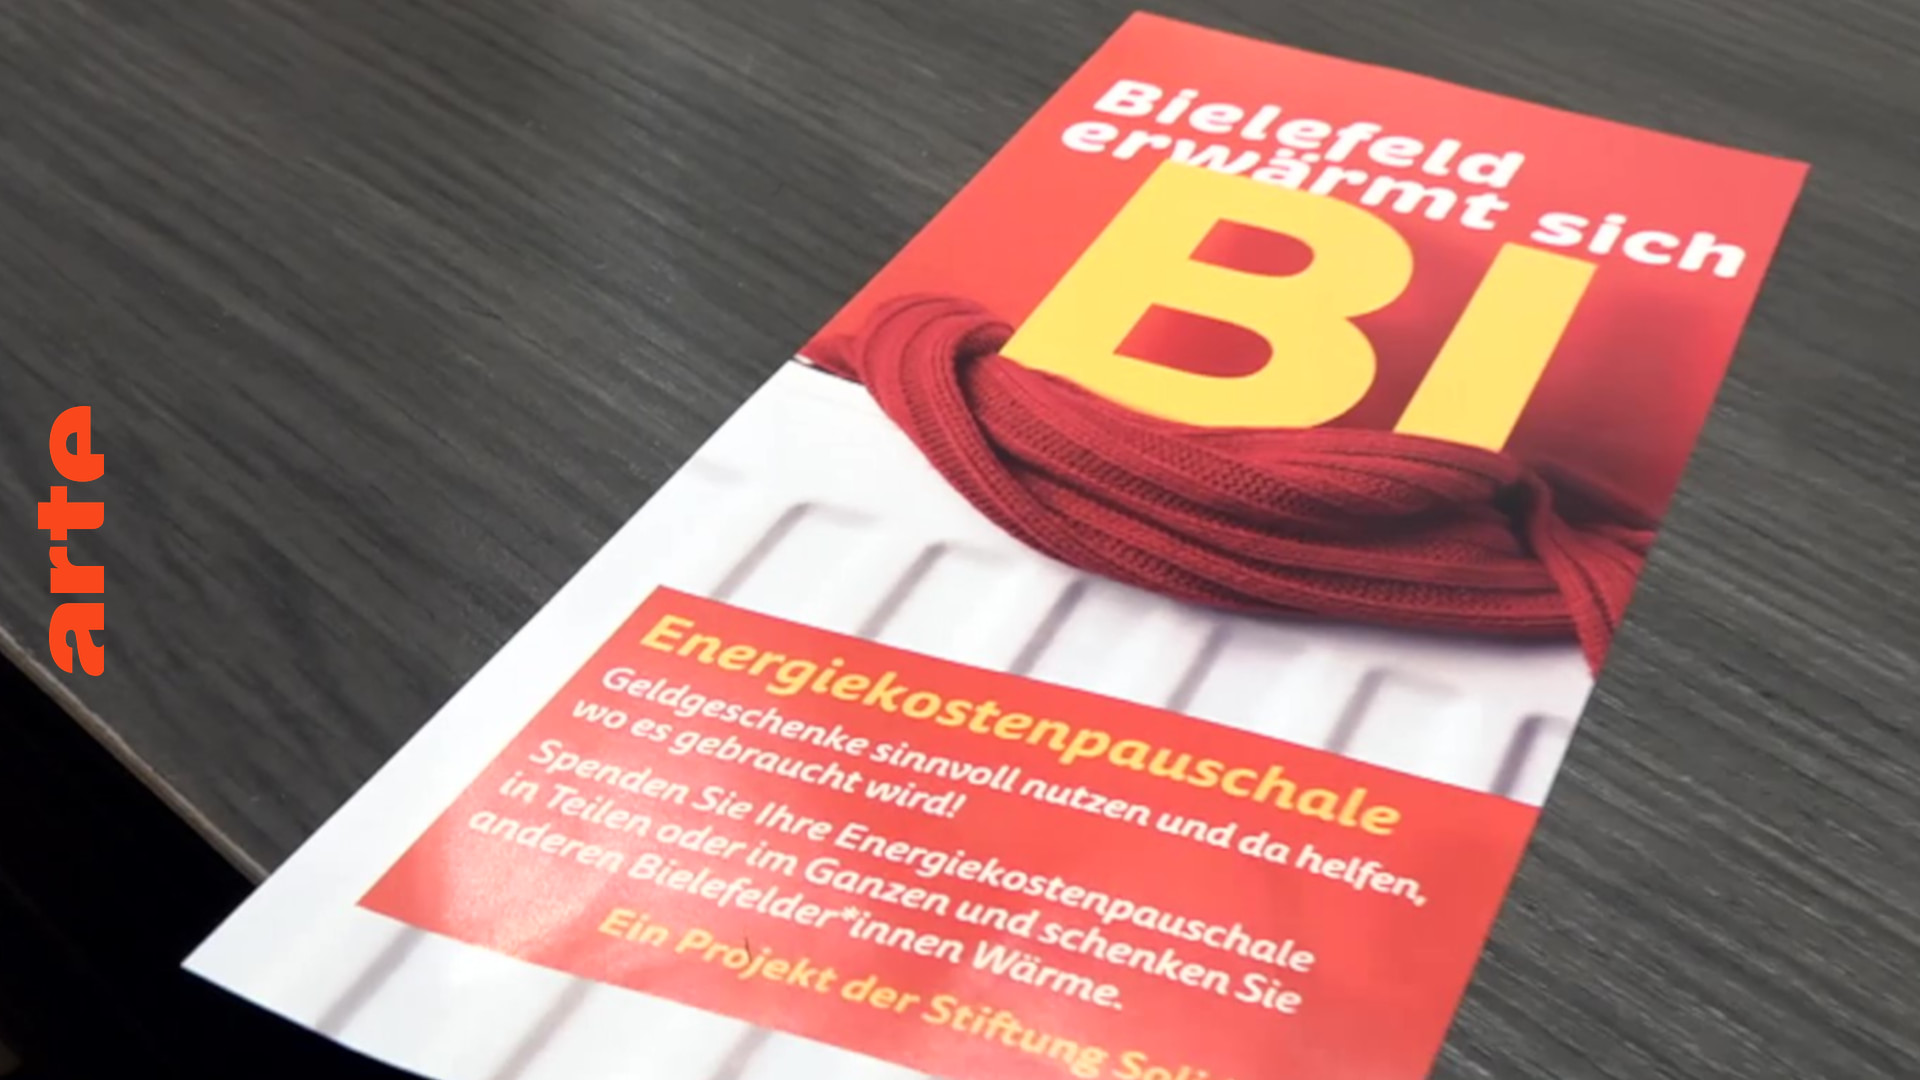 Energiekrise: Bielefeld erwärmt sich